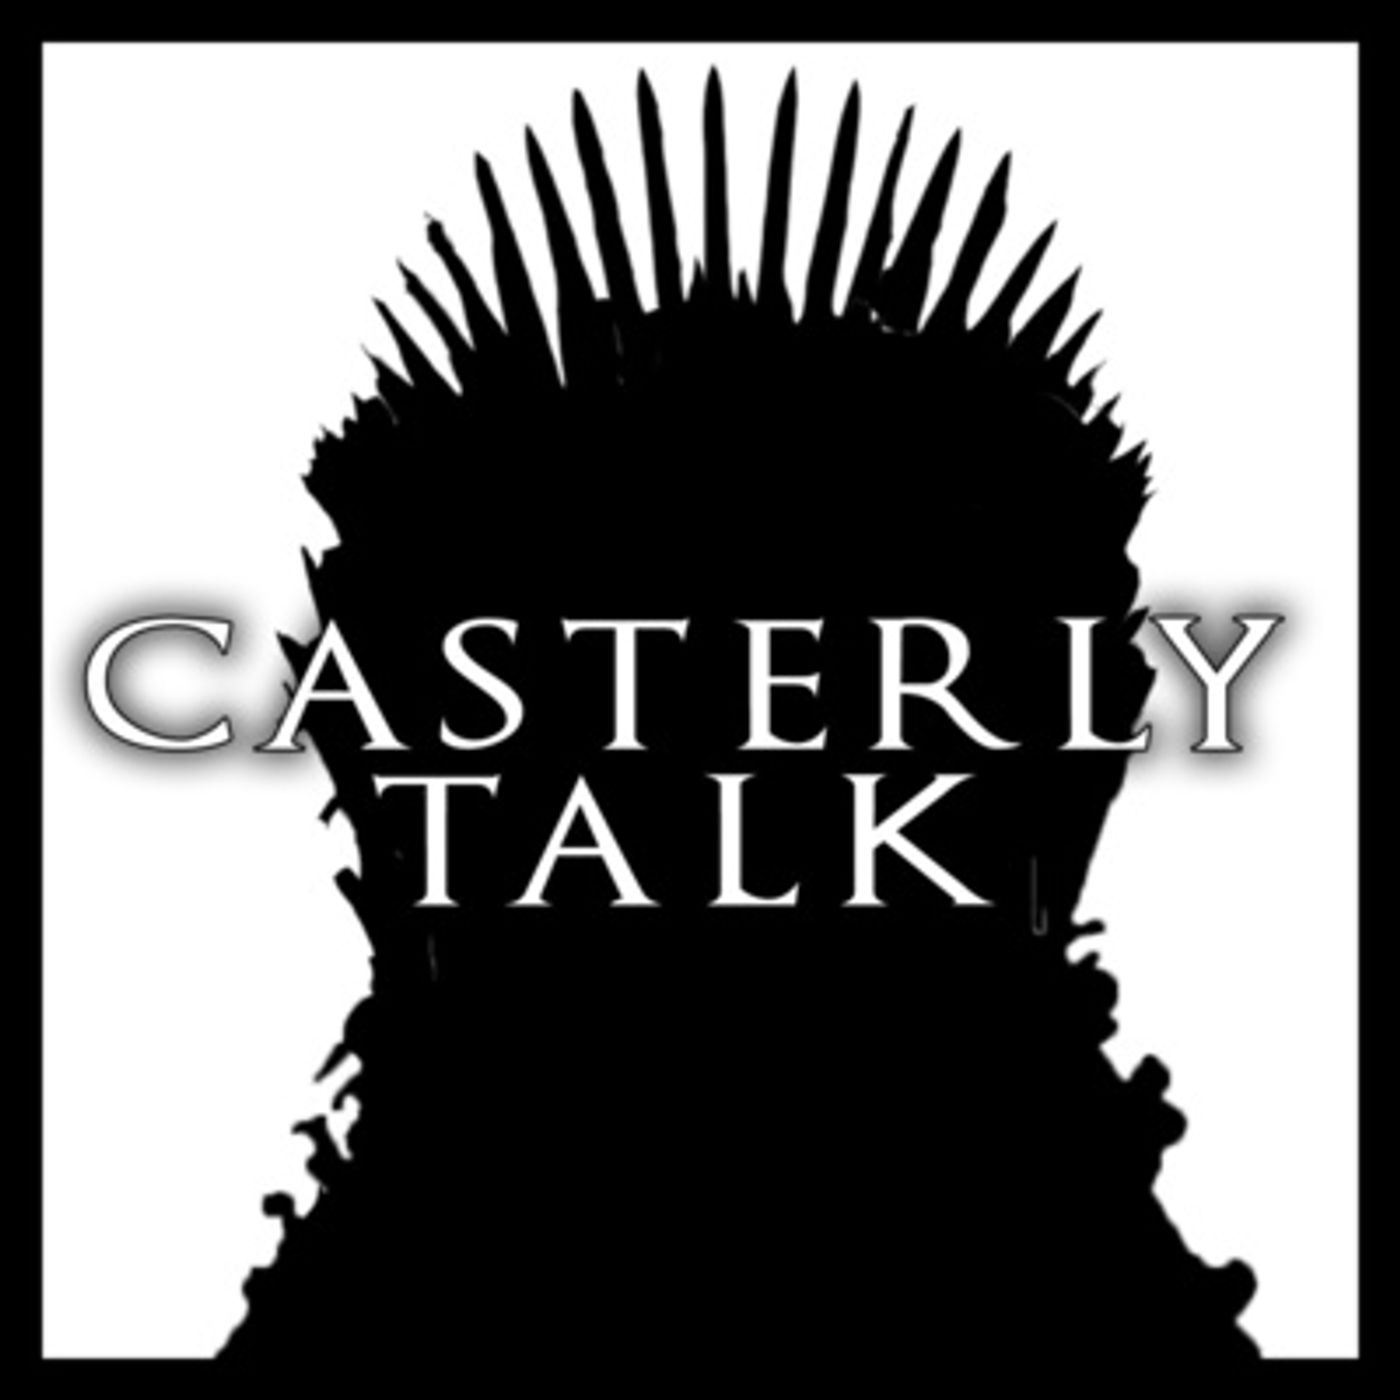 MHYSA - Game of Thrones Rewatch - Casterly Talk - EP 110